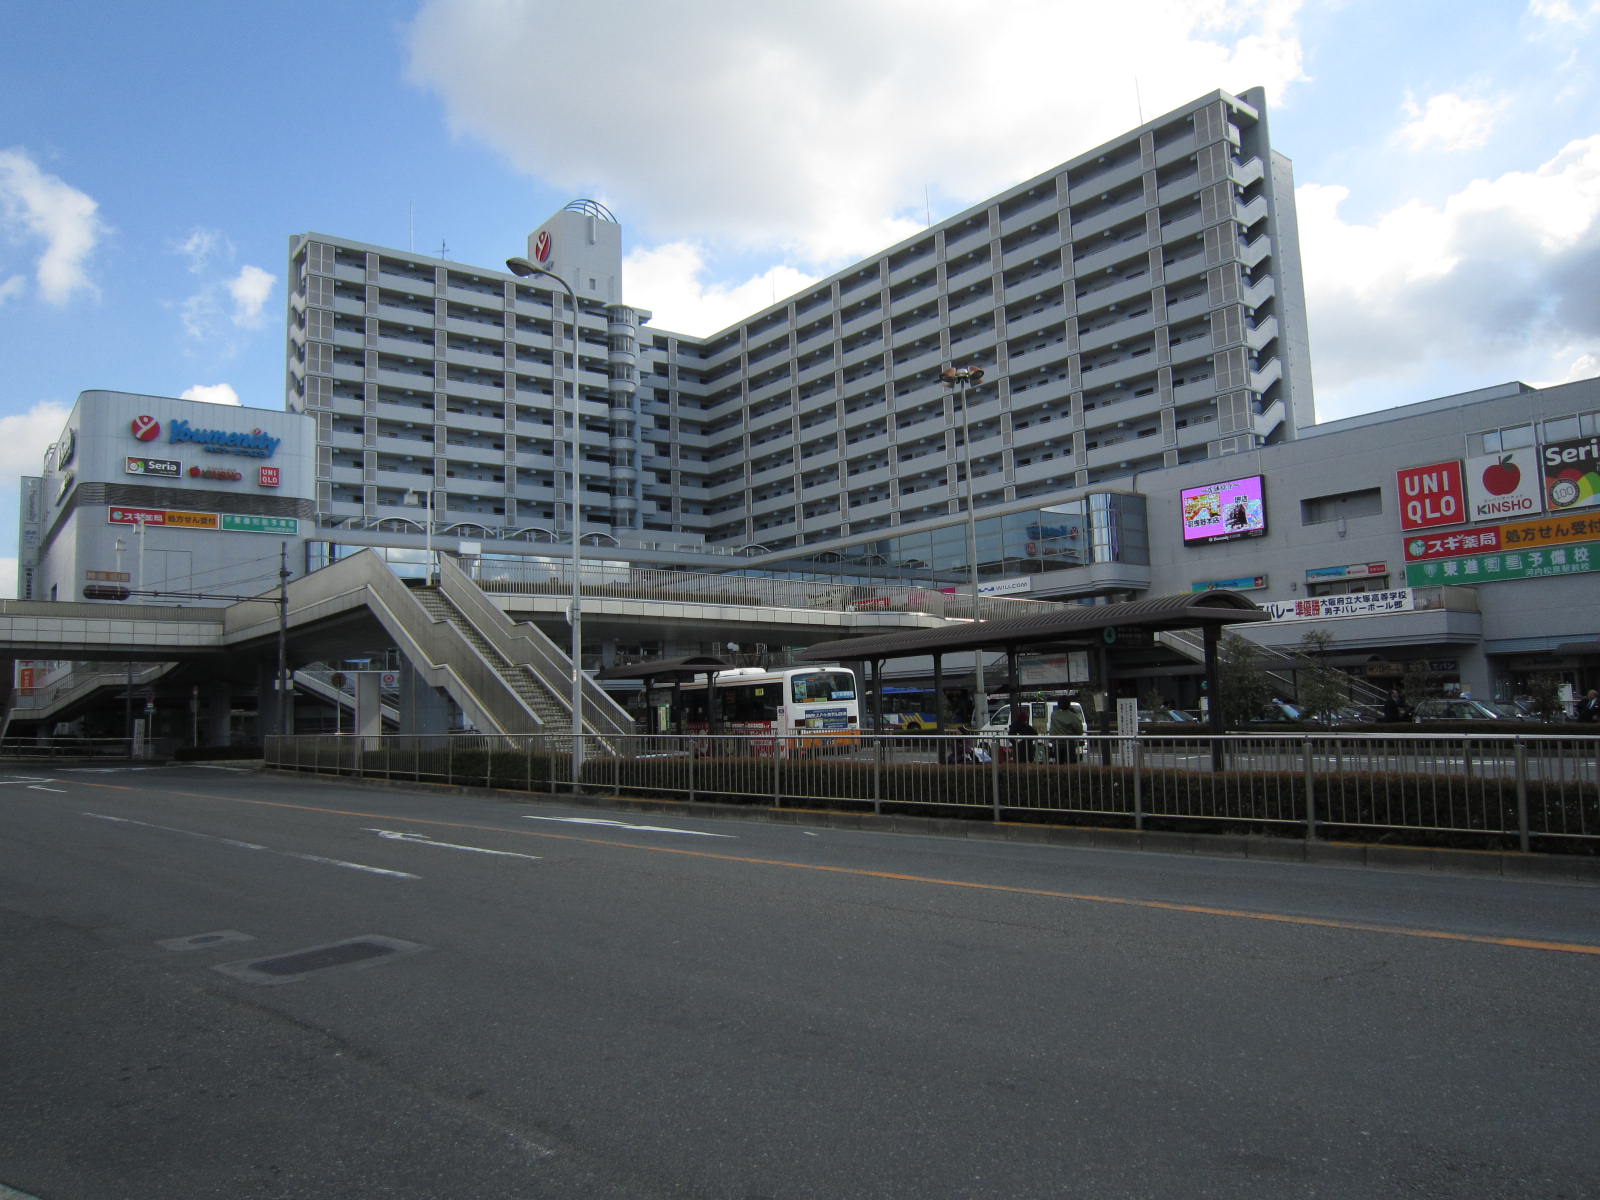 Shopping centre. Dream 1417m until sanity Matsubara (shopping center)